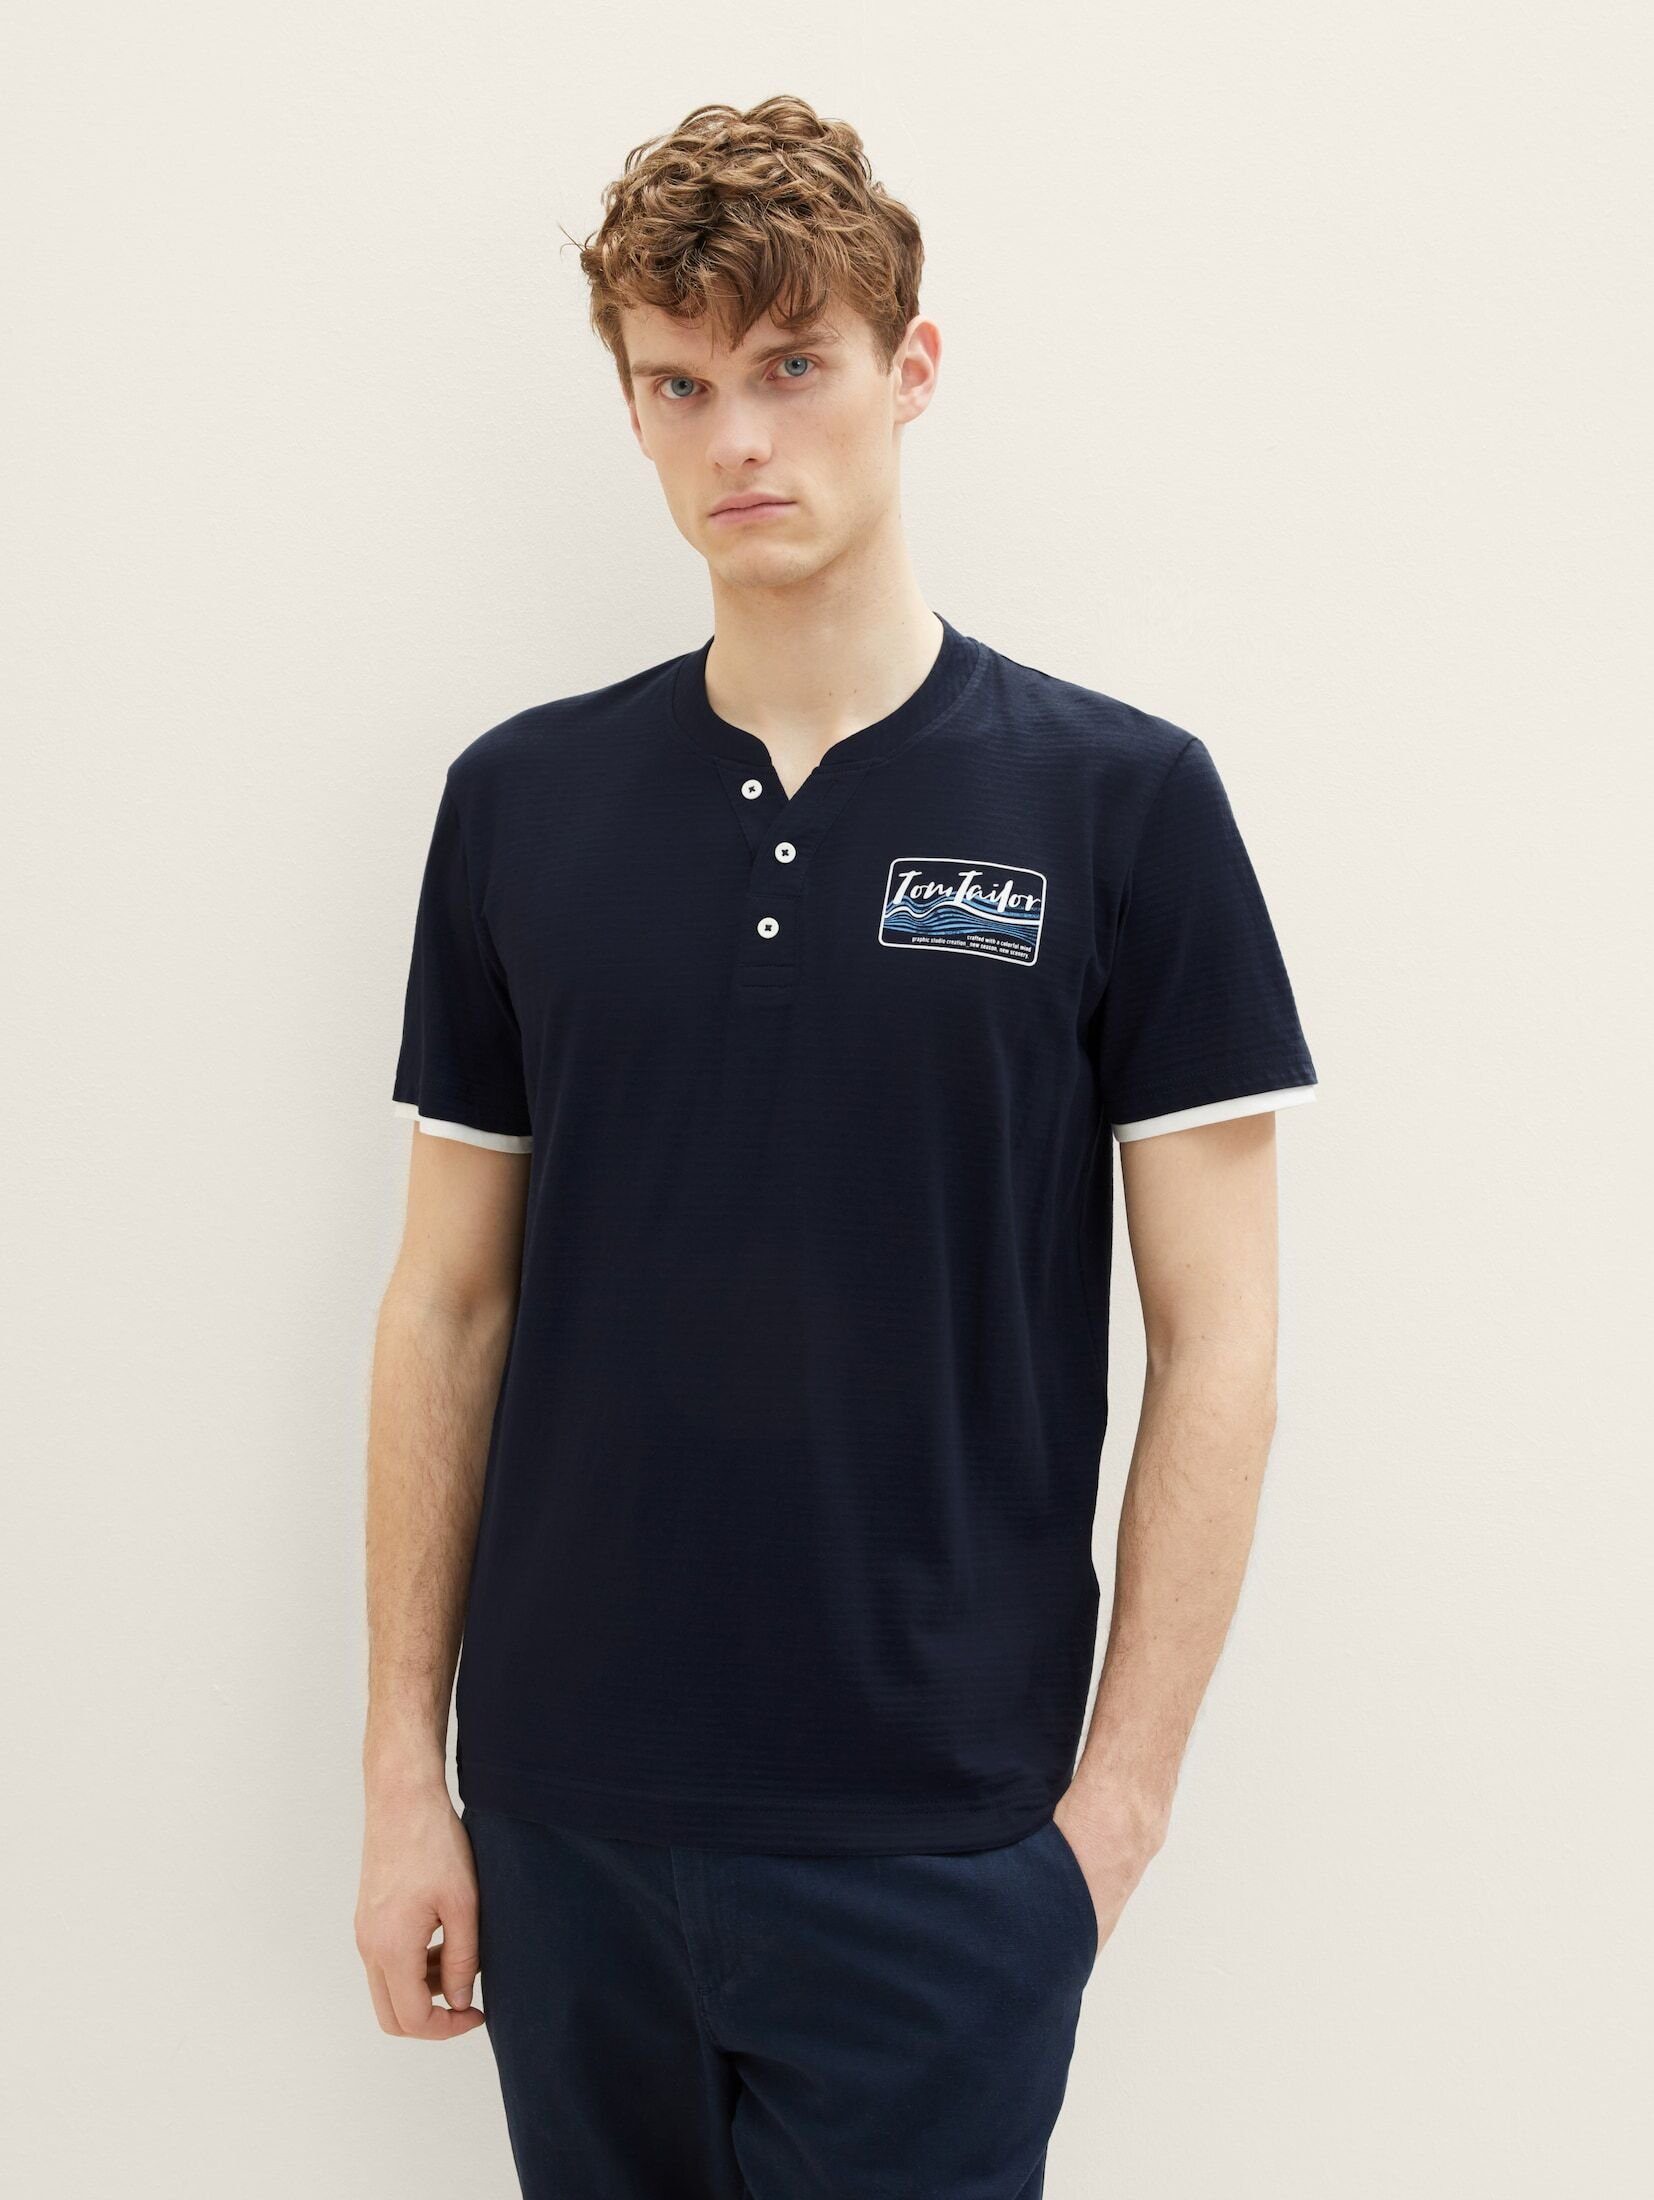 TOM TAILOR T-Shirt Serafinoshirt mit Print captain blue sky